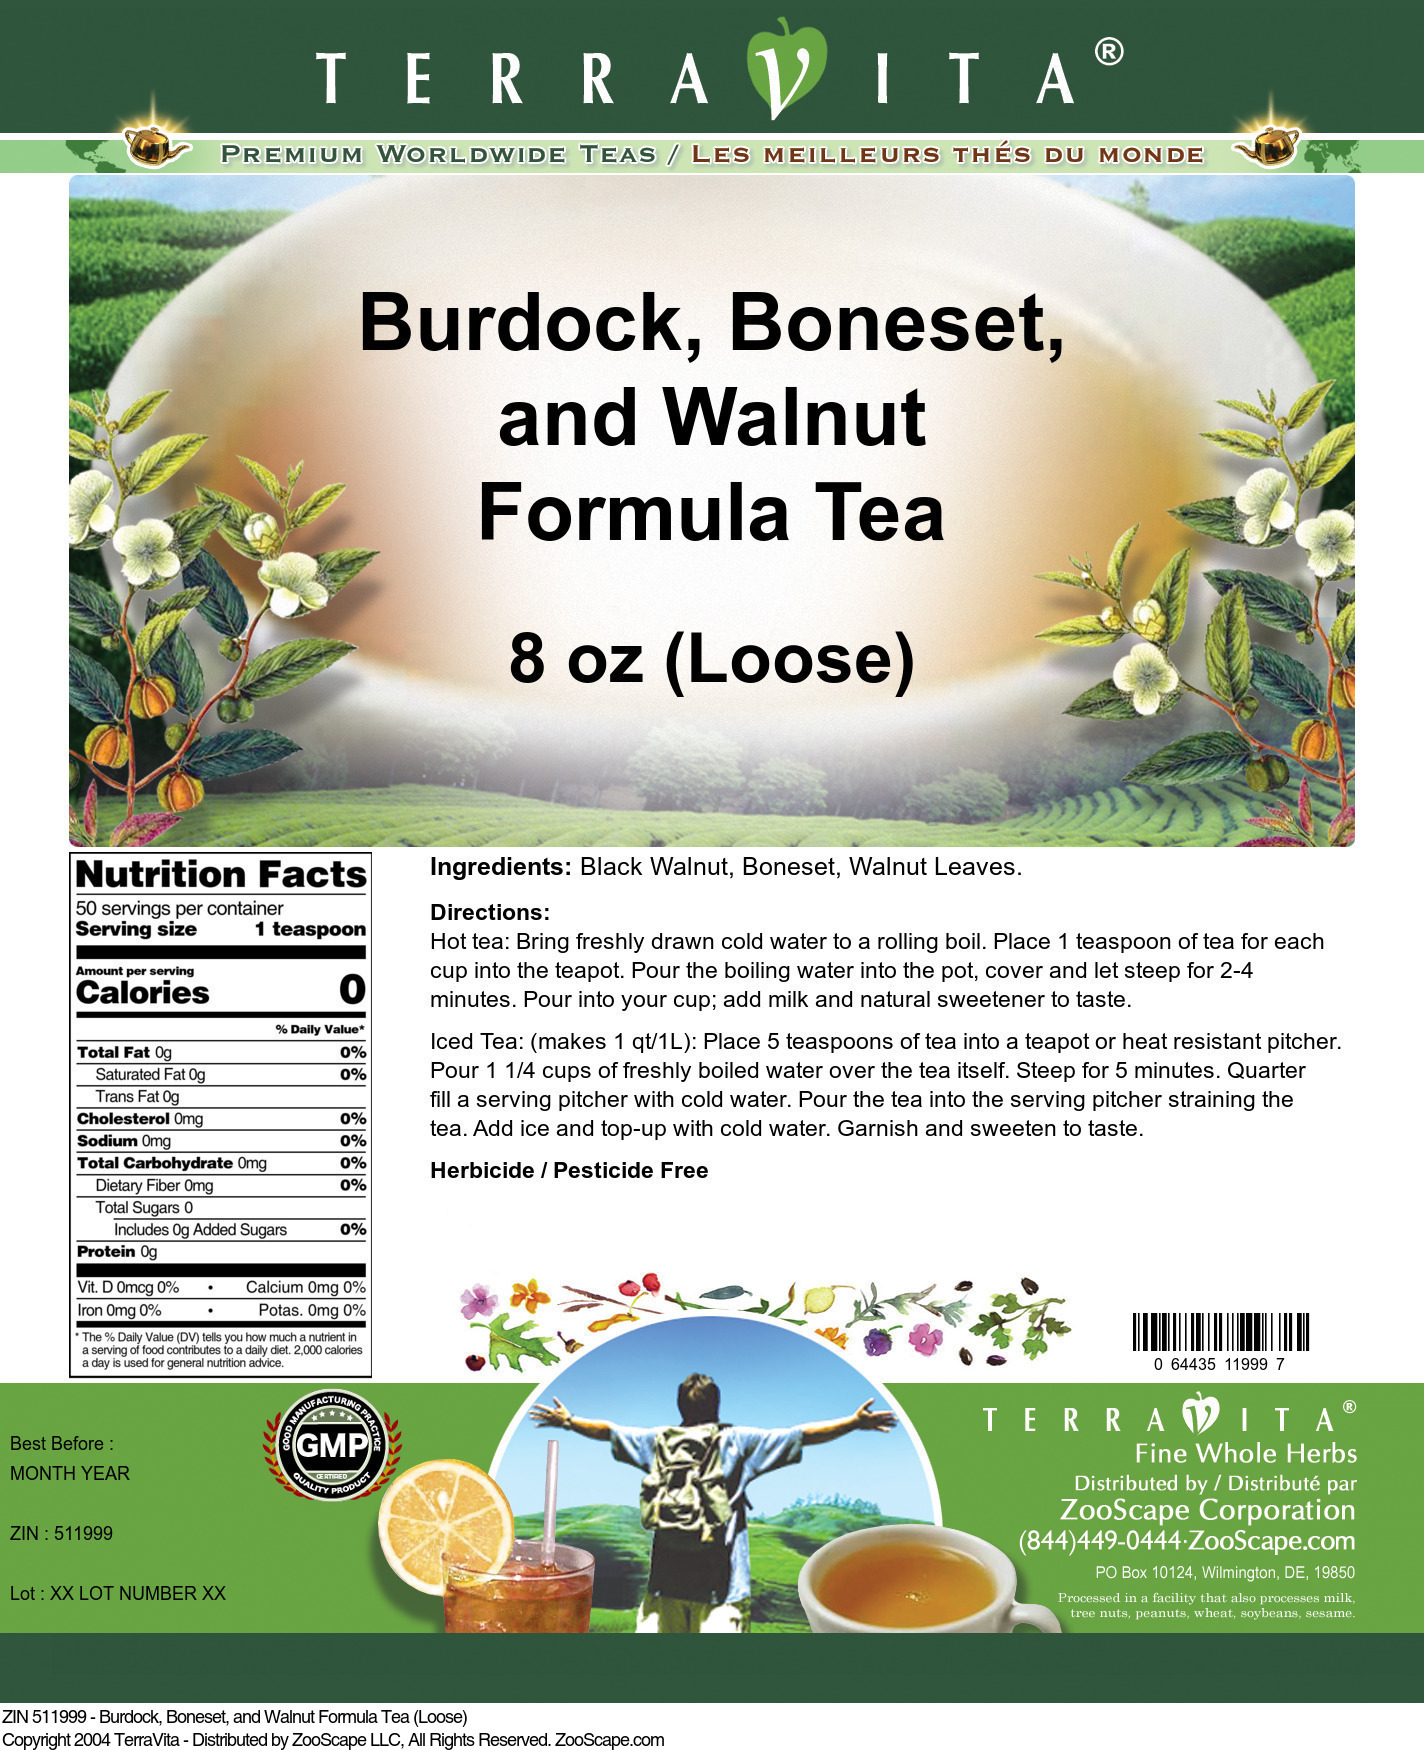 Burdock, Boneset, and Walnut Formula Tea (Loose) - Label